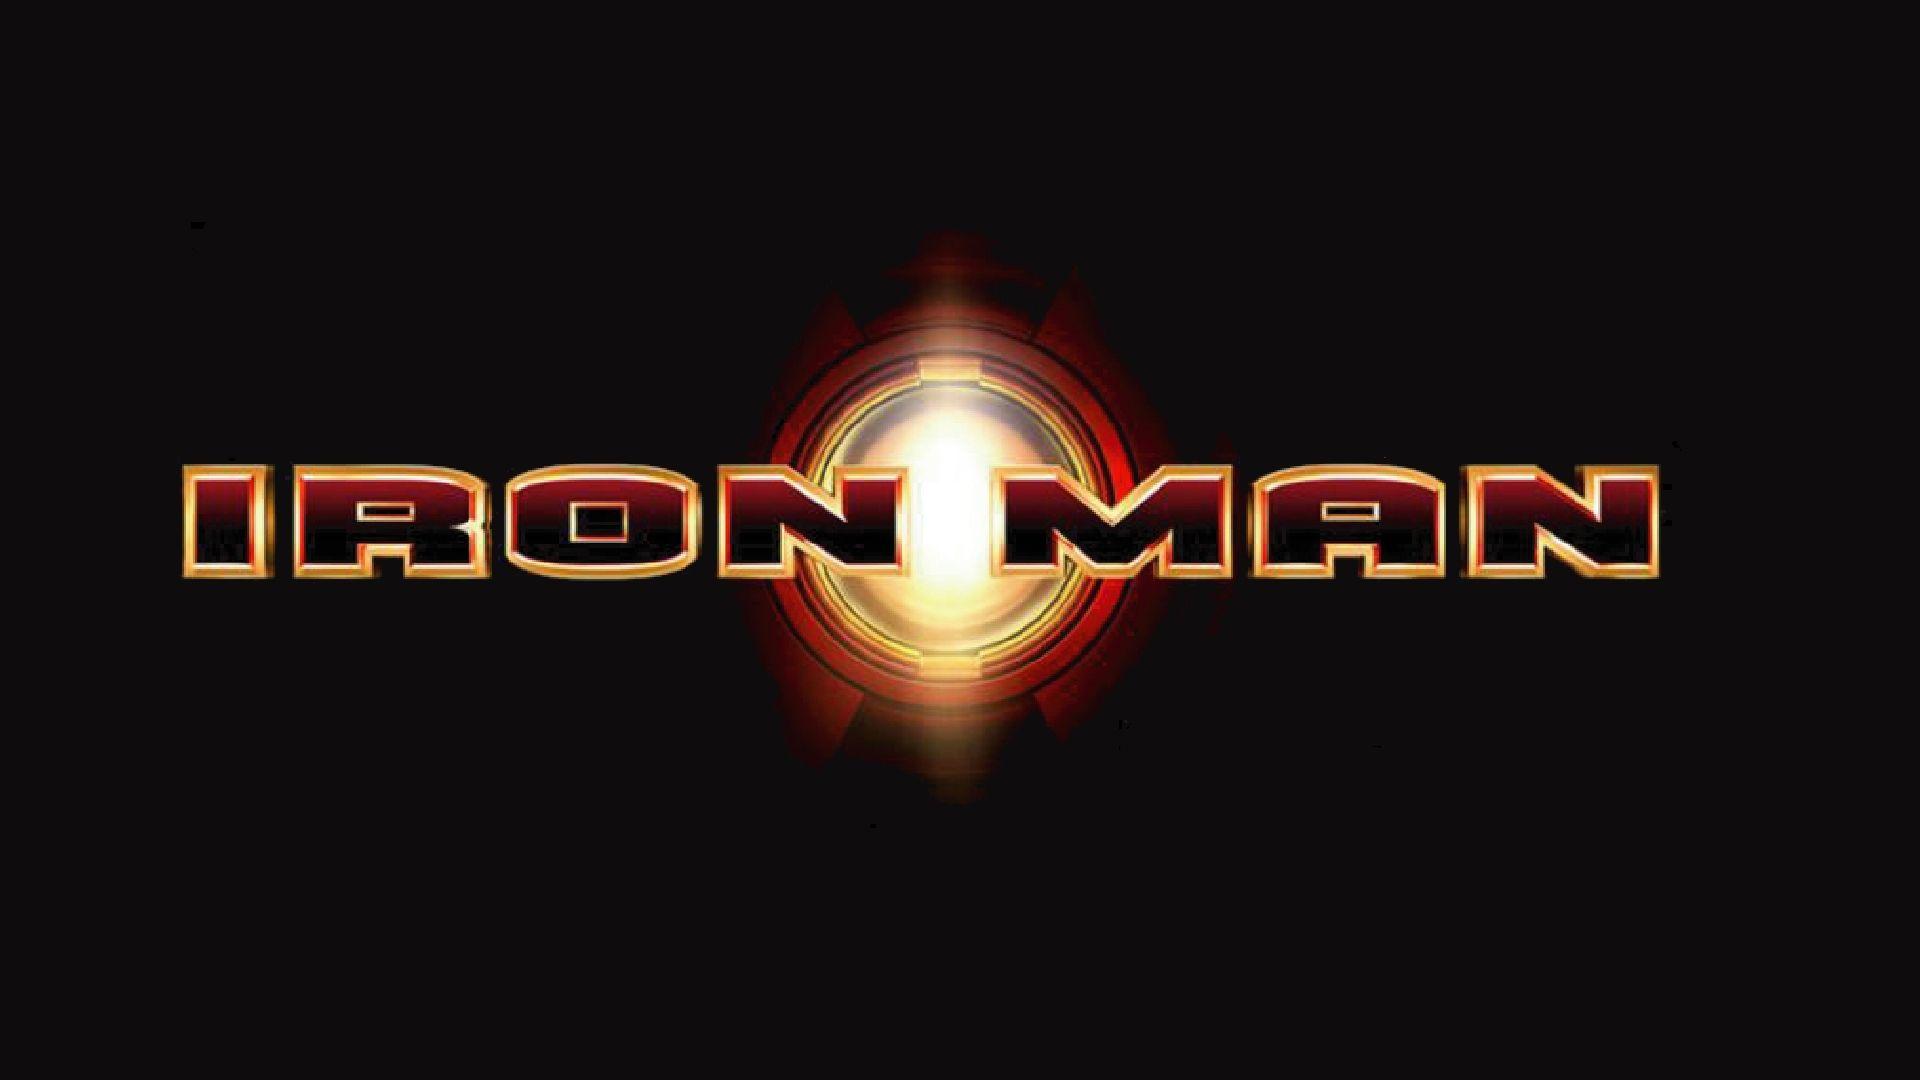 Iron Man desktop background download